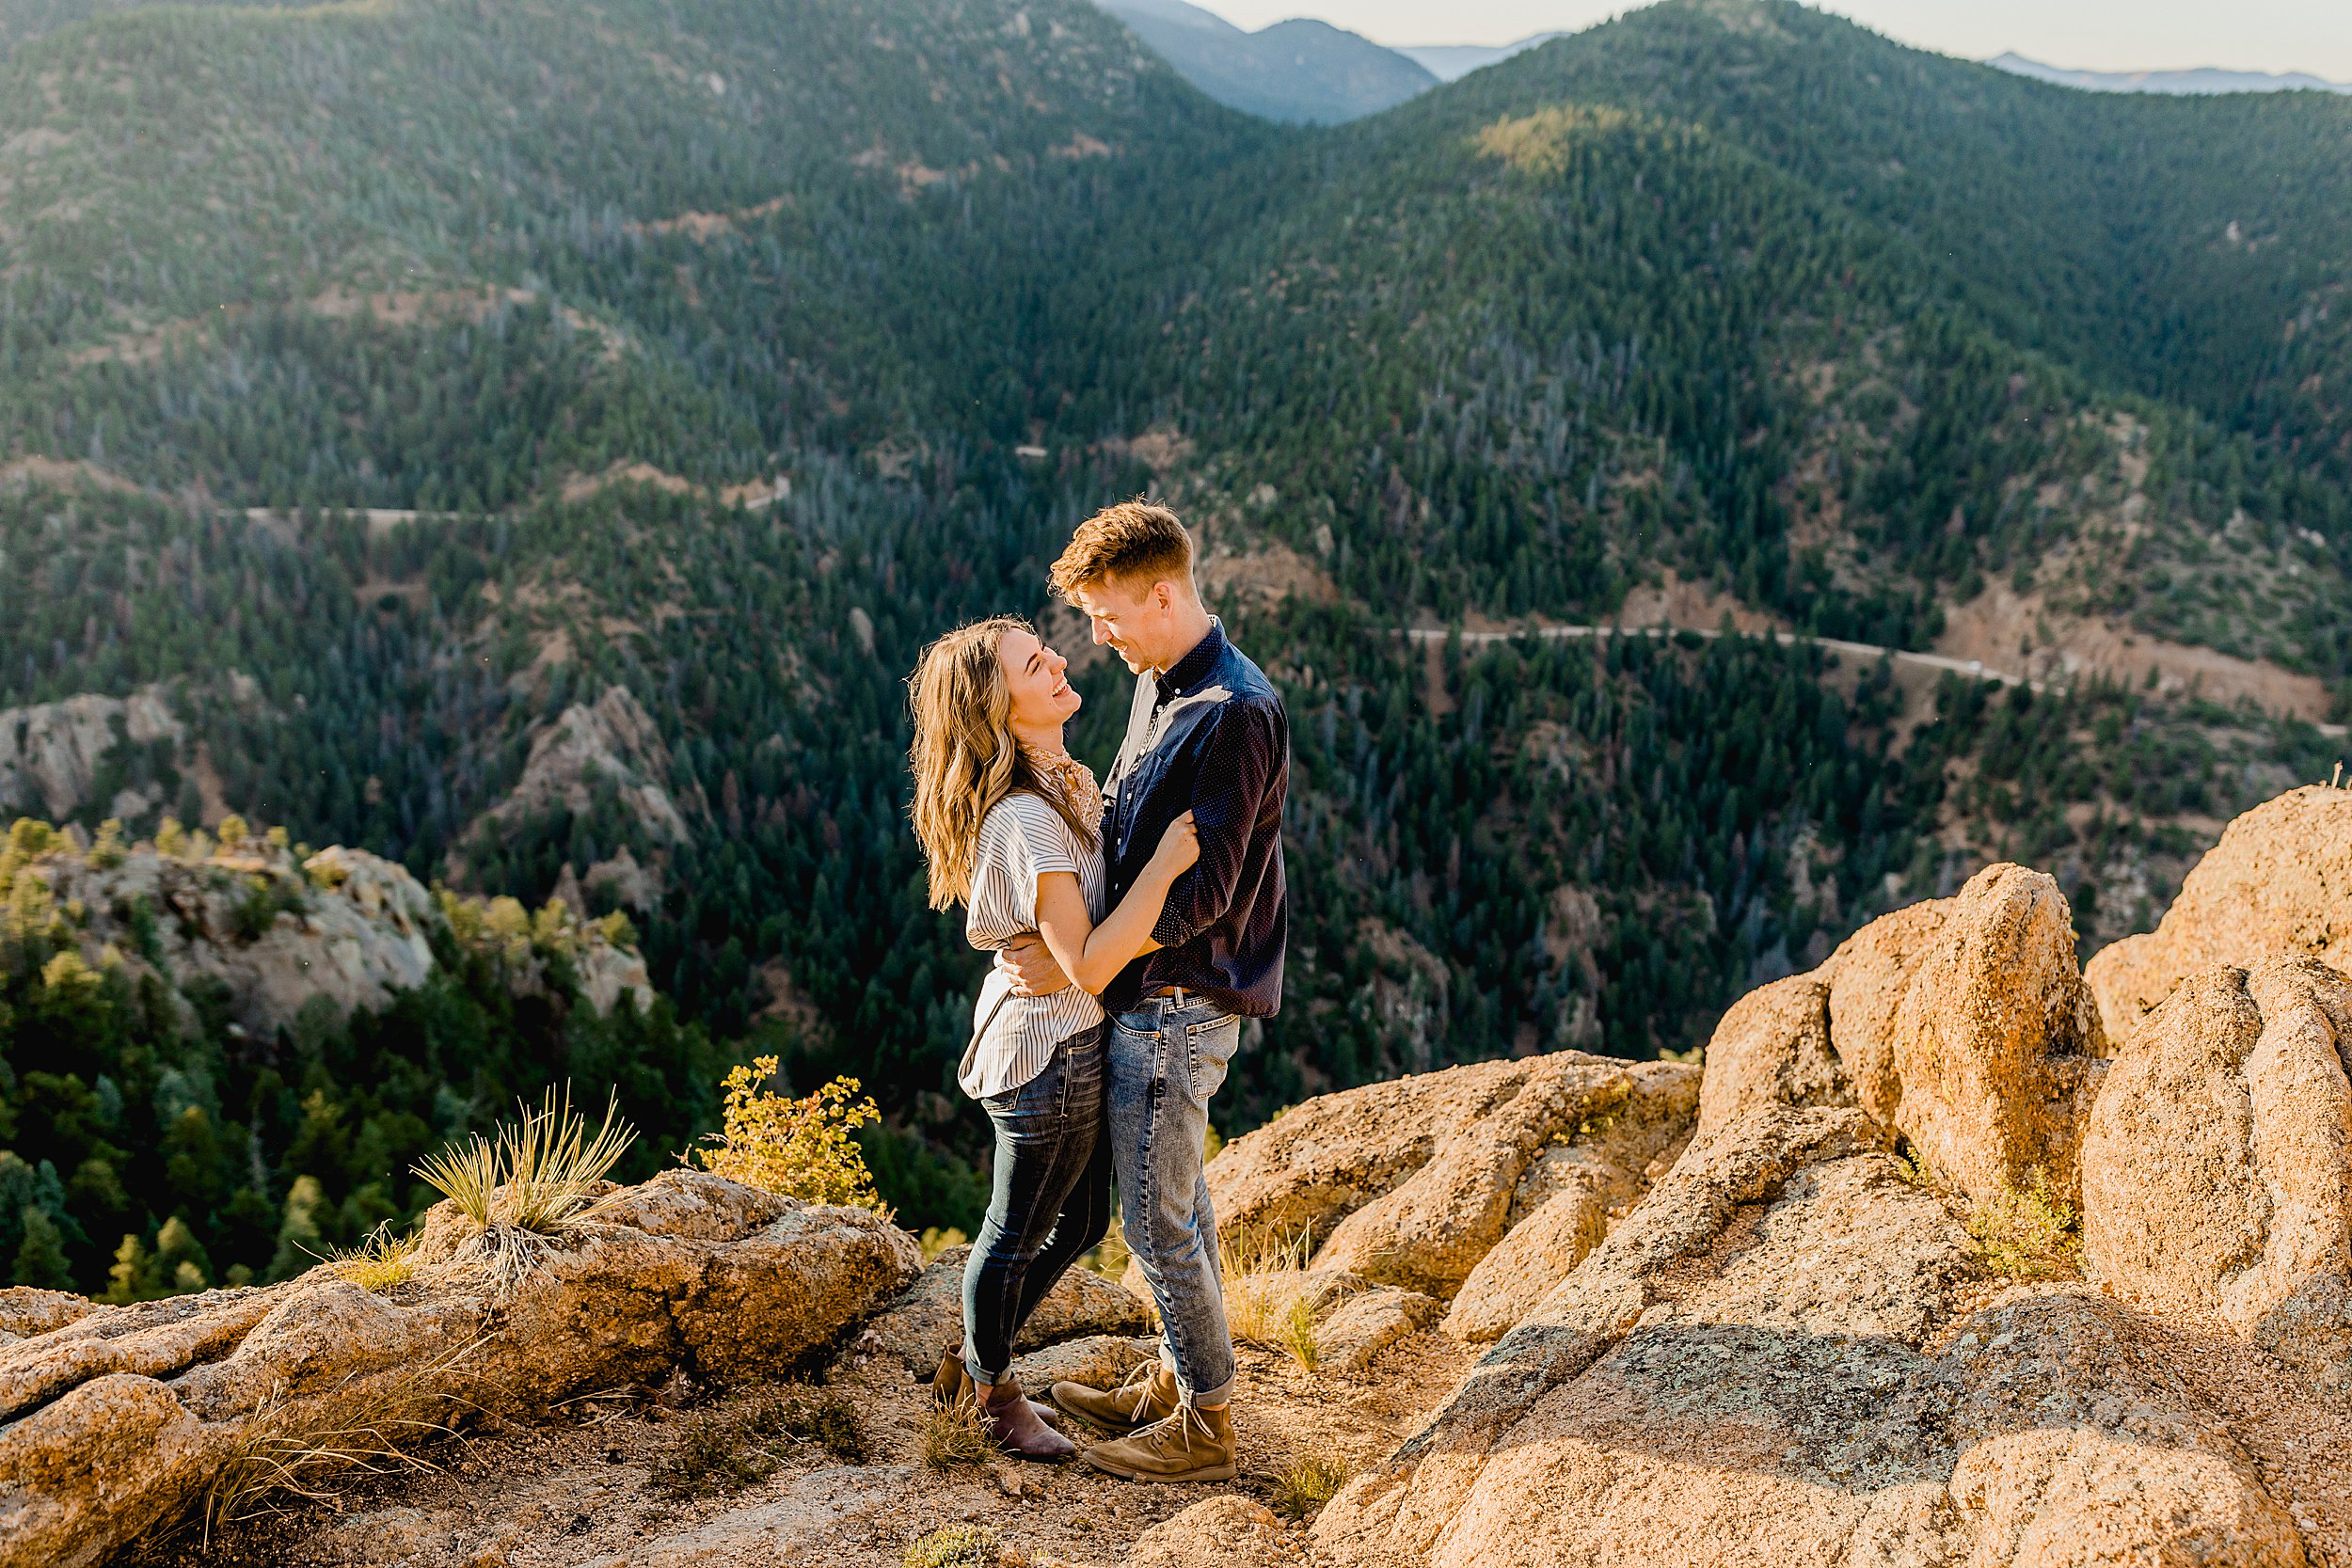 colorado mountain engagement photos, photographer captures couples hiking engagement photos in gorgeous colorado mountains